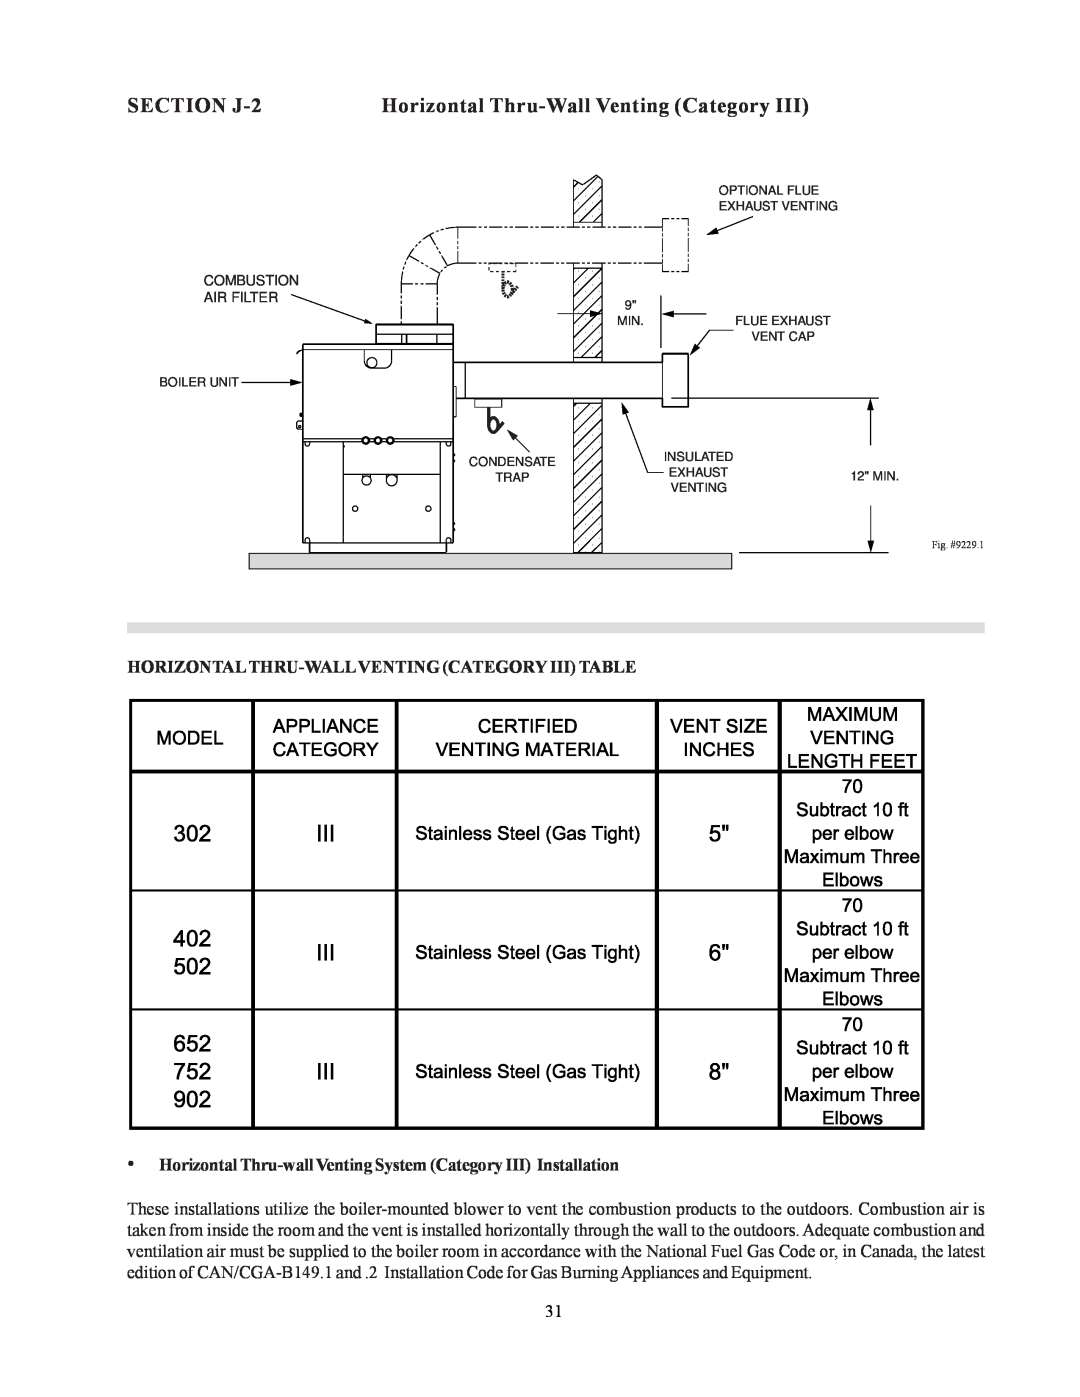 Raypak 302-902 manual SECTION J-2, Horizontal Thru-WallVenting Category, Horizontalthru-Wallventingcategory Iii Table 